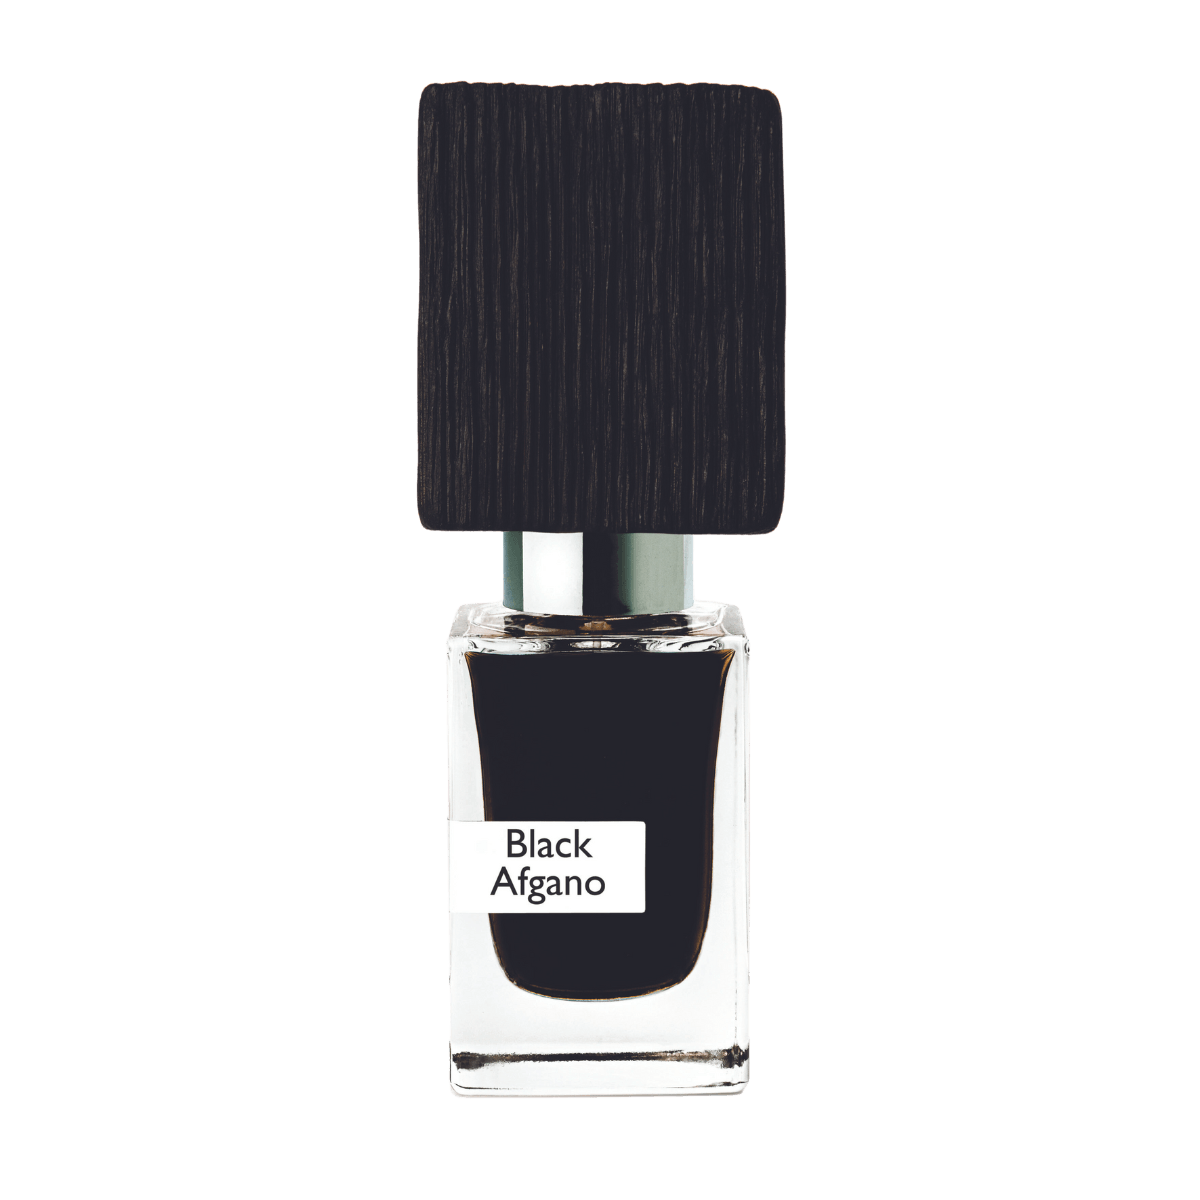 Image of Black Afgano extrait de parfum 30 ml by the perfume brand Nasomatto